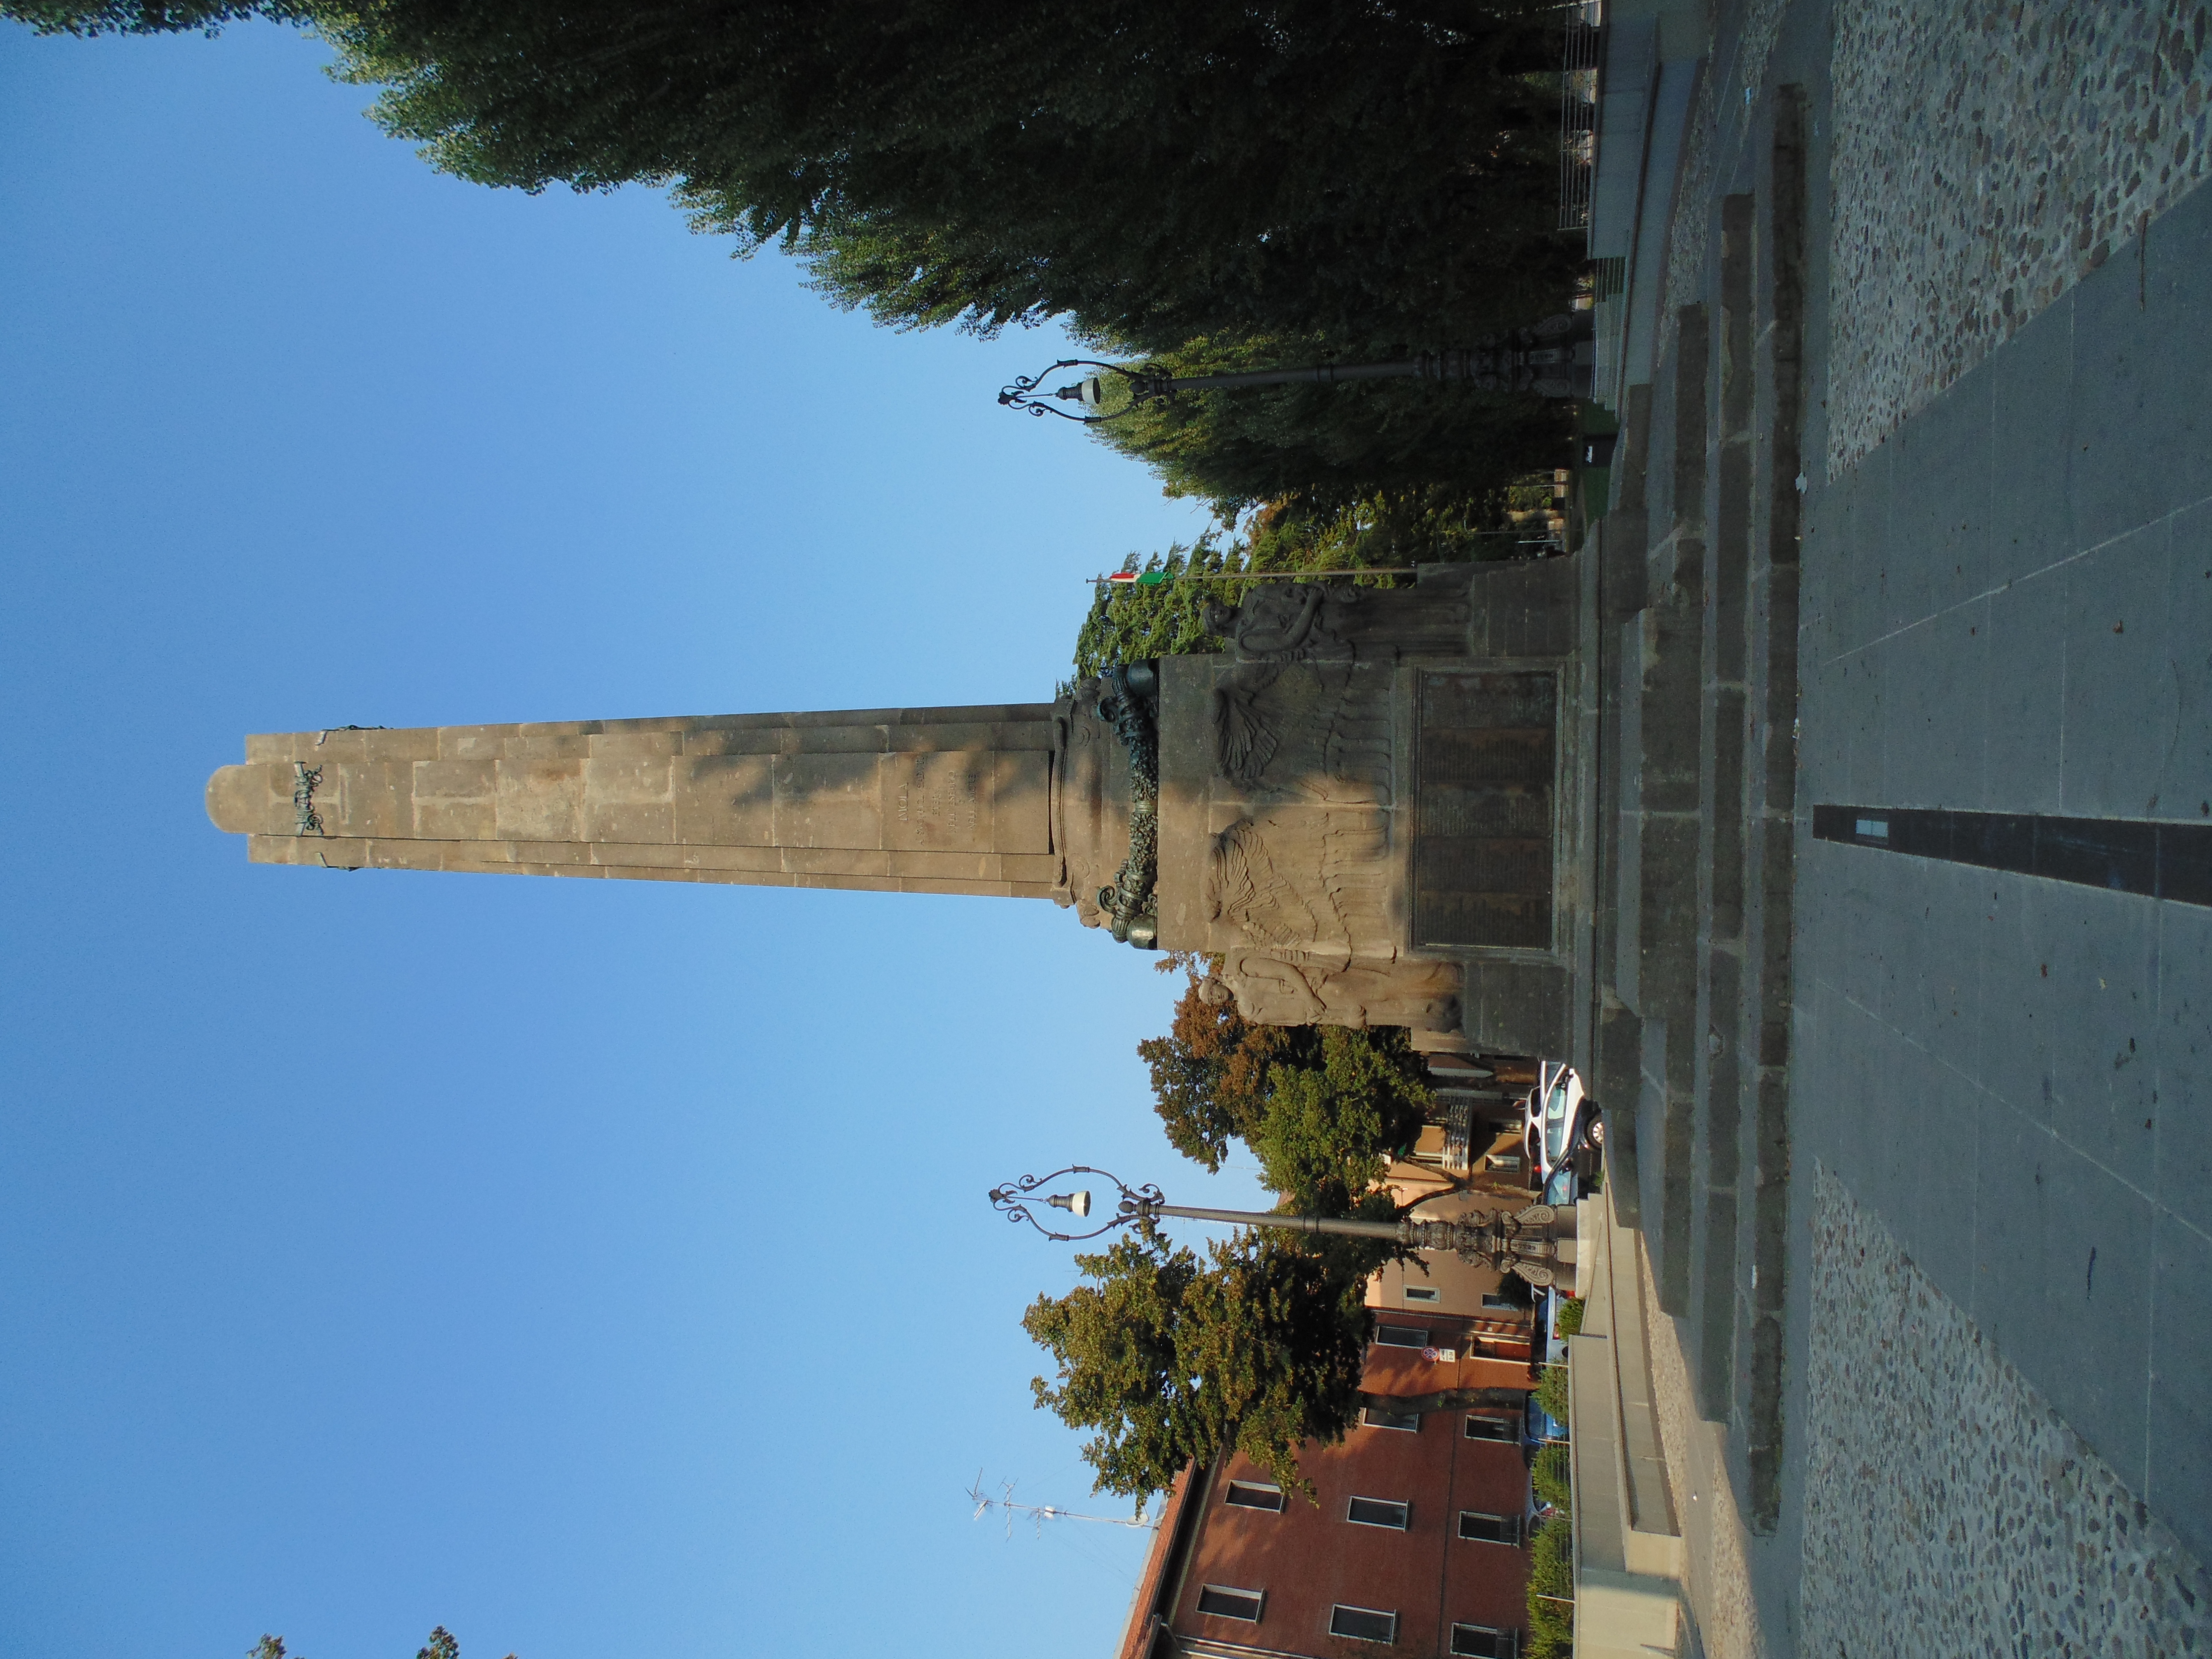 photo: https://upload.wikimedia.org/wikipedia/commons/b/b1/Monumento_ai_Caduti_della_prima_guerra_mondiale.JPG